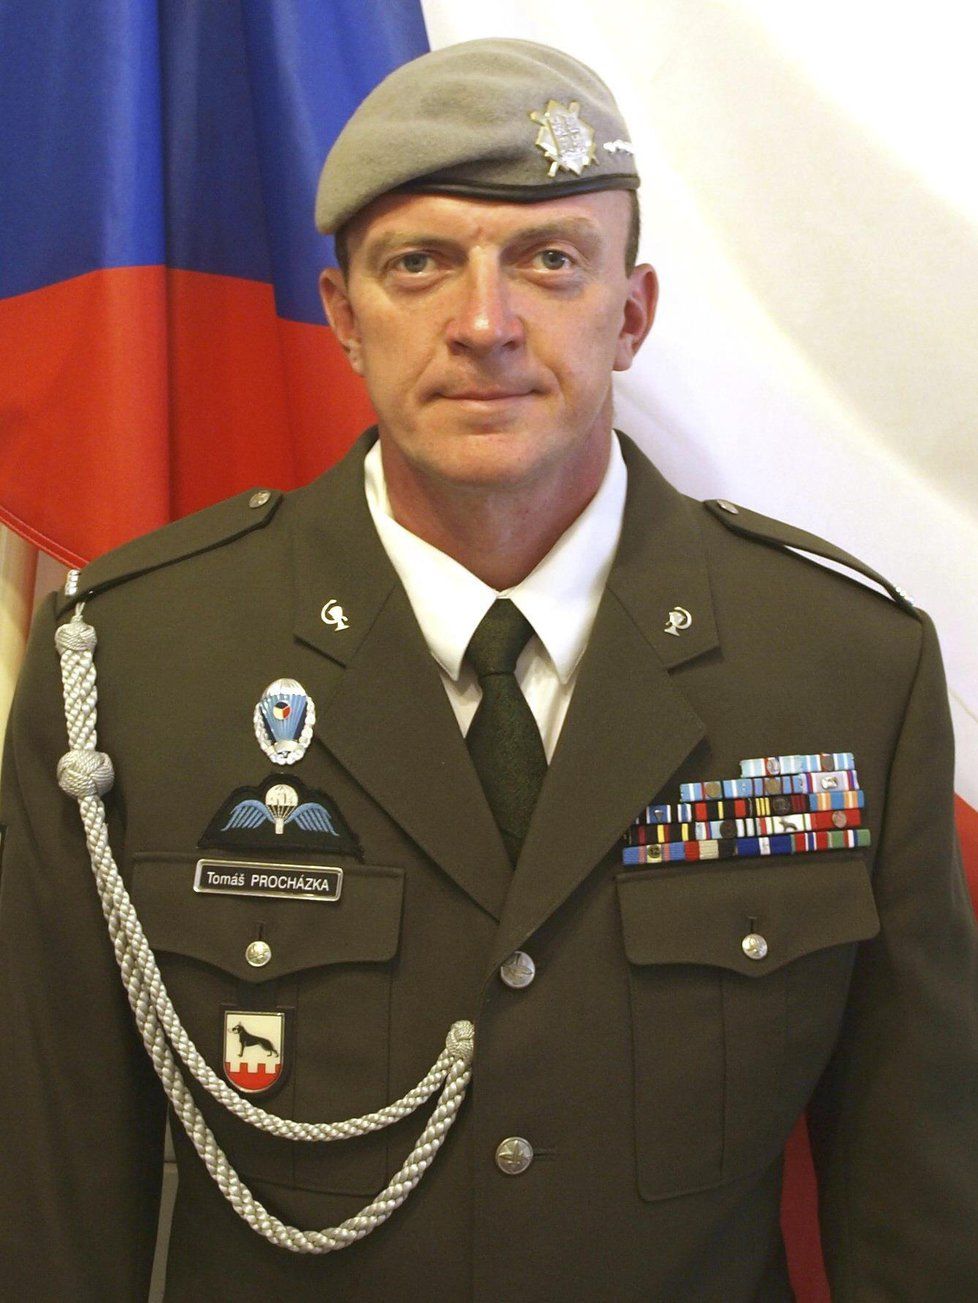 Rotný Tomáš Procházka. Český voják, který zahynul v Afghánistánu po útoku vojáka oblečeného do Afghánské uniformy.